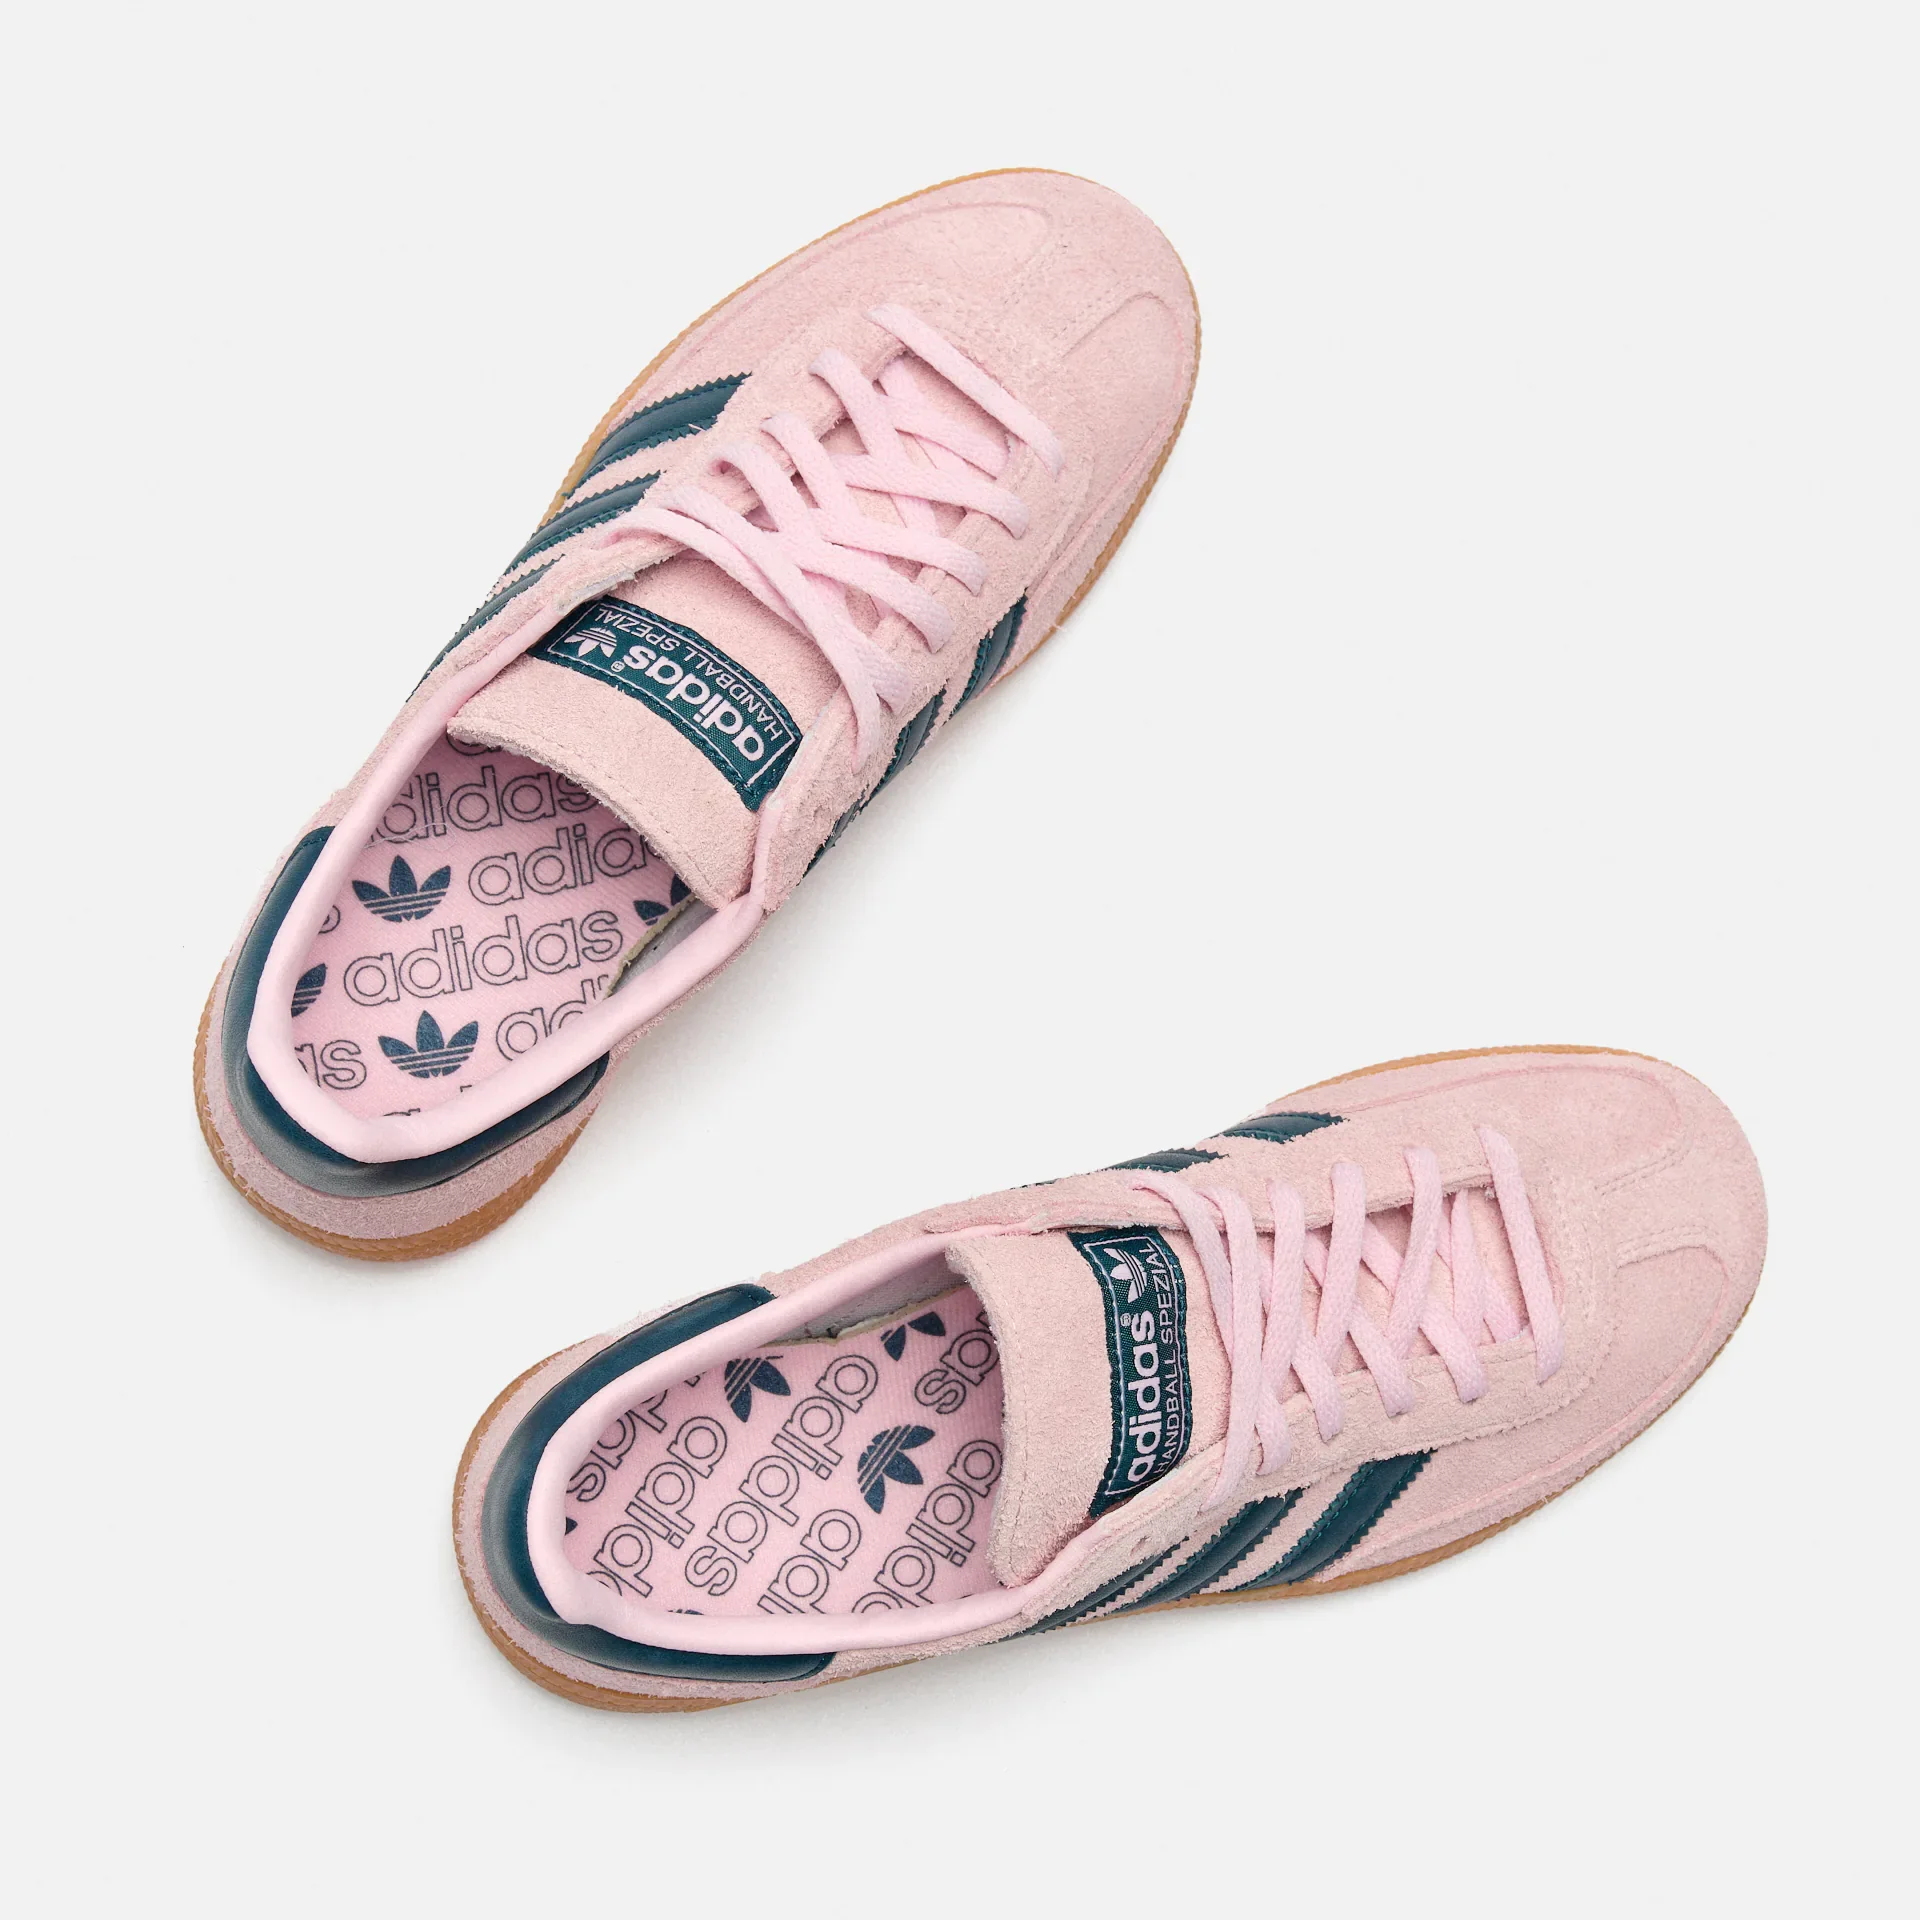 adidas Originals Handball Spezial Sneaker Clear Pink/Arctic Night/Gum